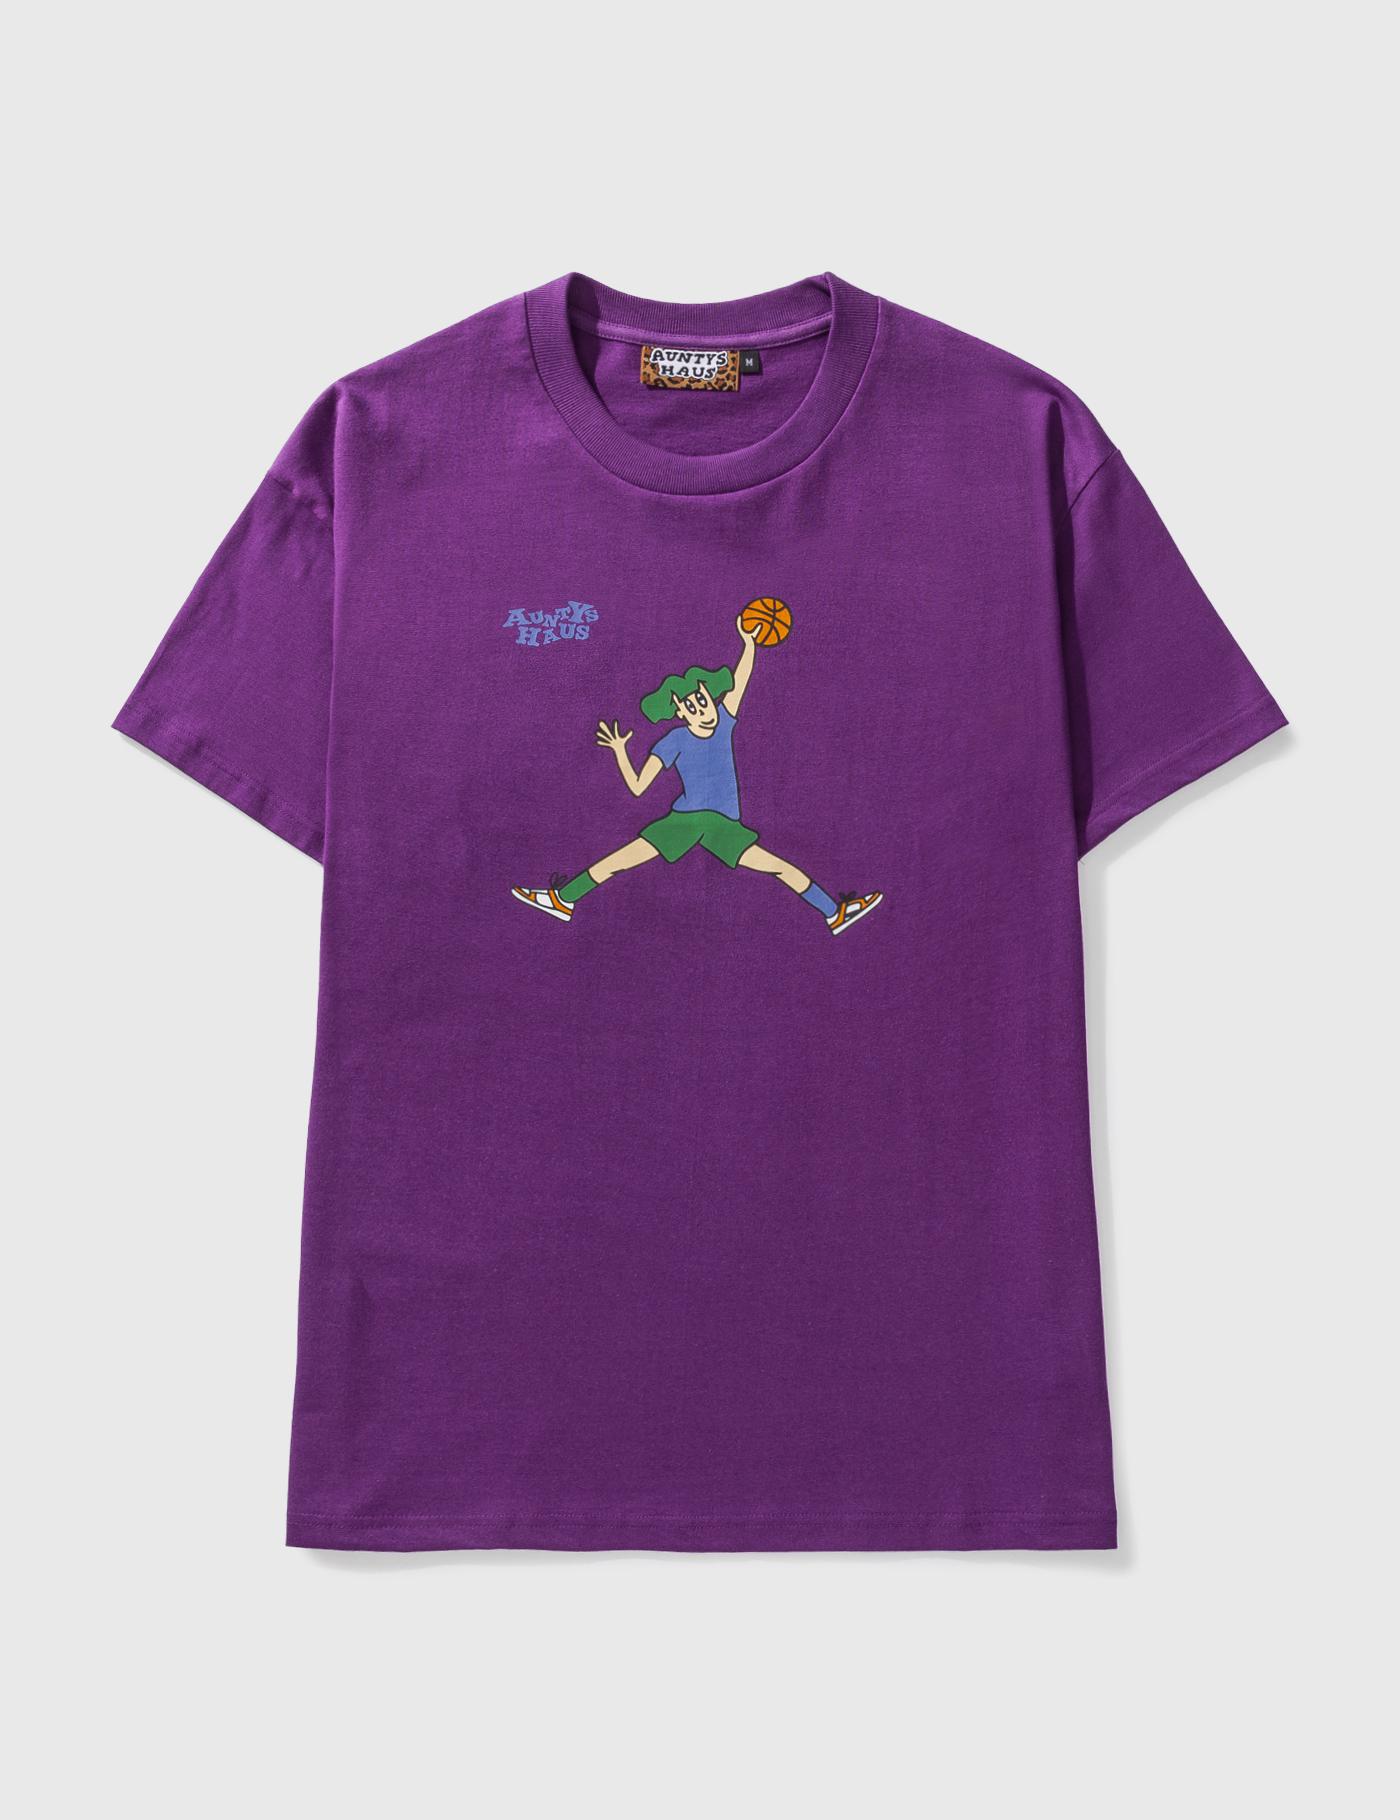 Jump Woman T-shirt by AUNTYS HAUS